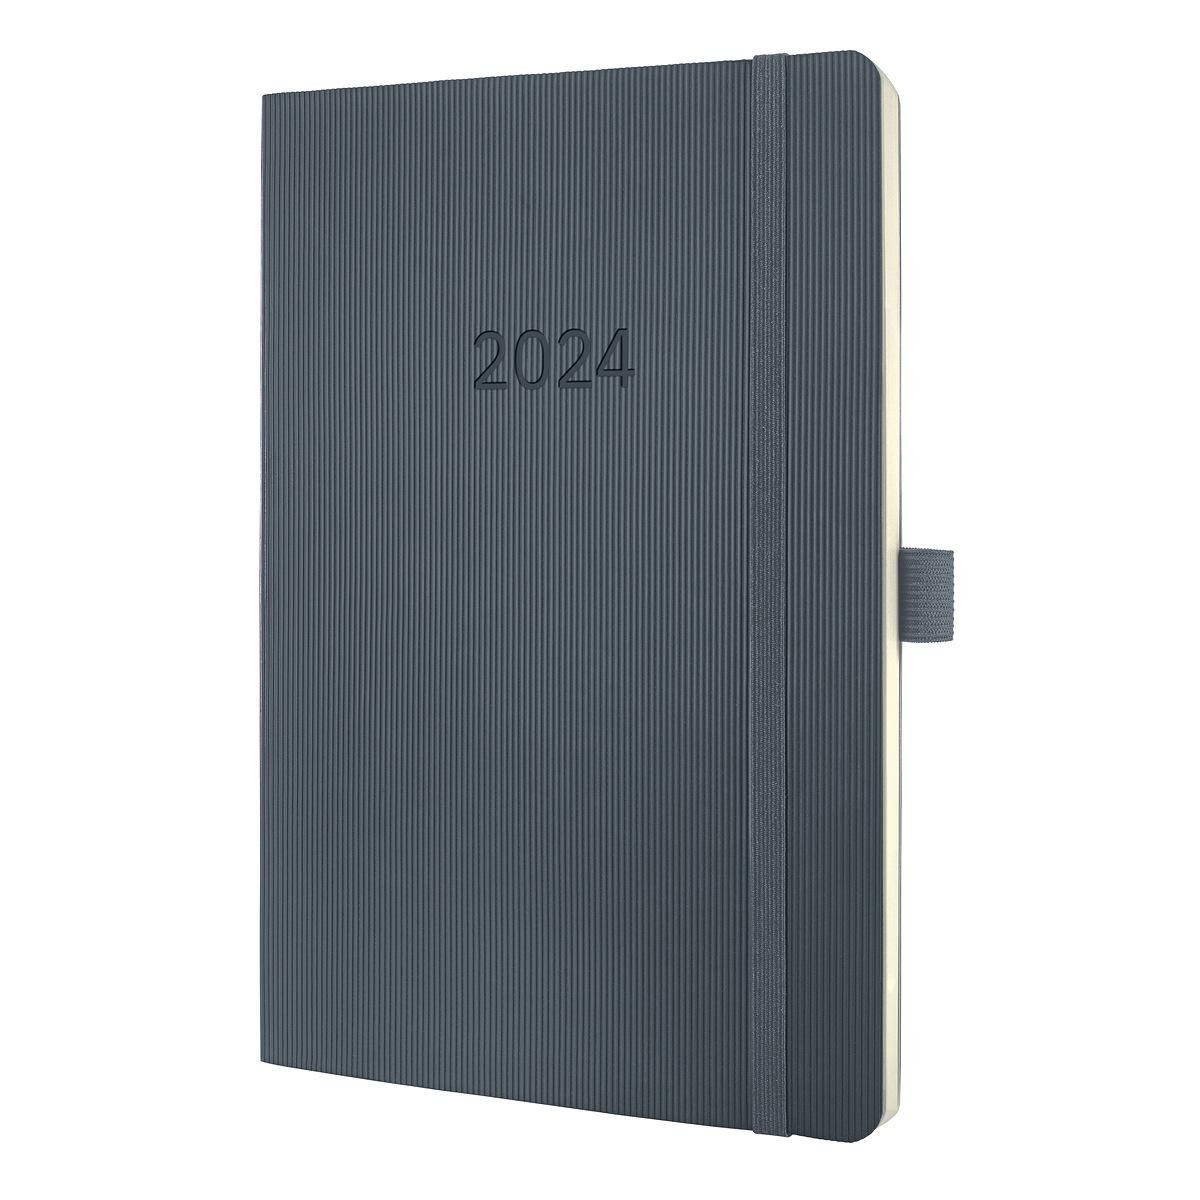 Sigel Buchkalender 1 Buchkalender 2024 Conceptum ca. A5 - grau